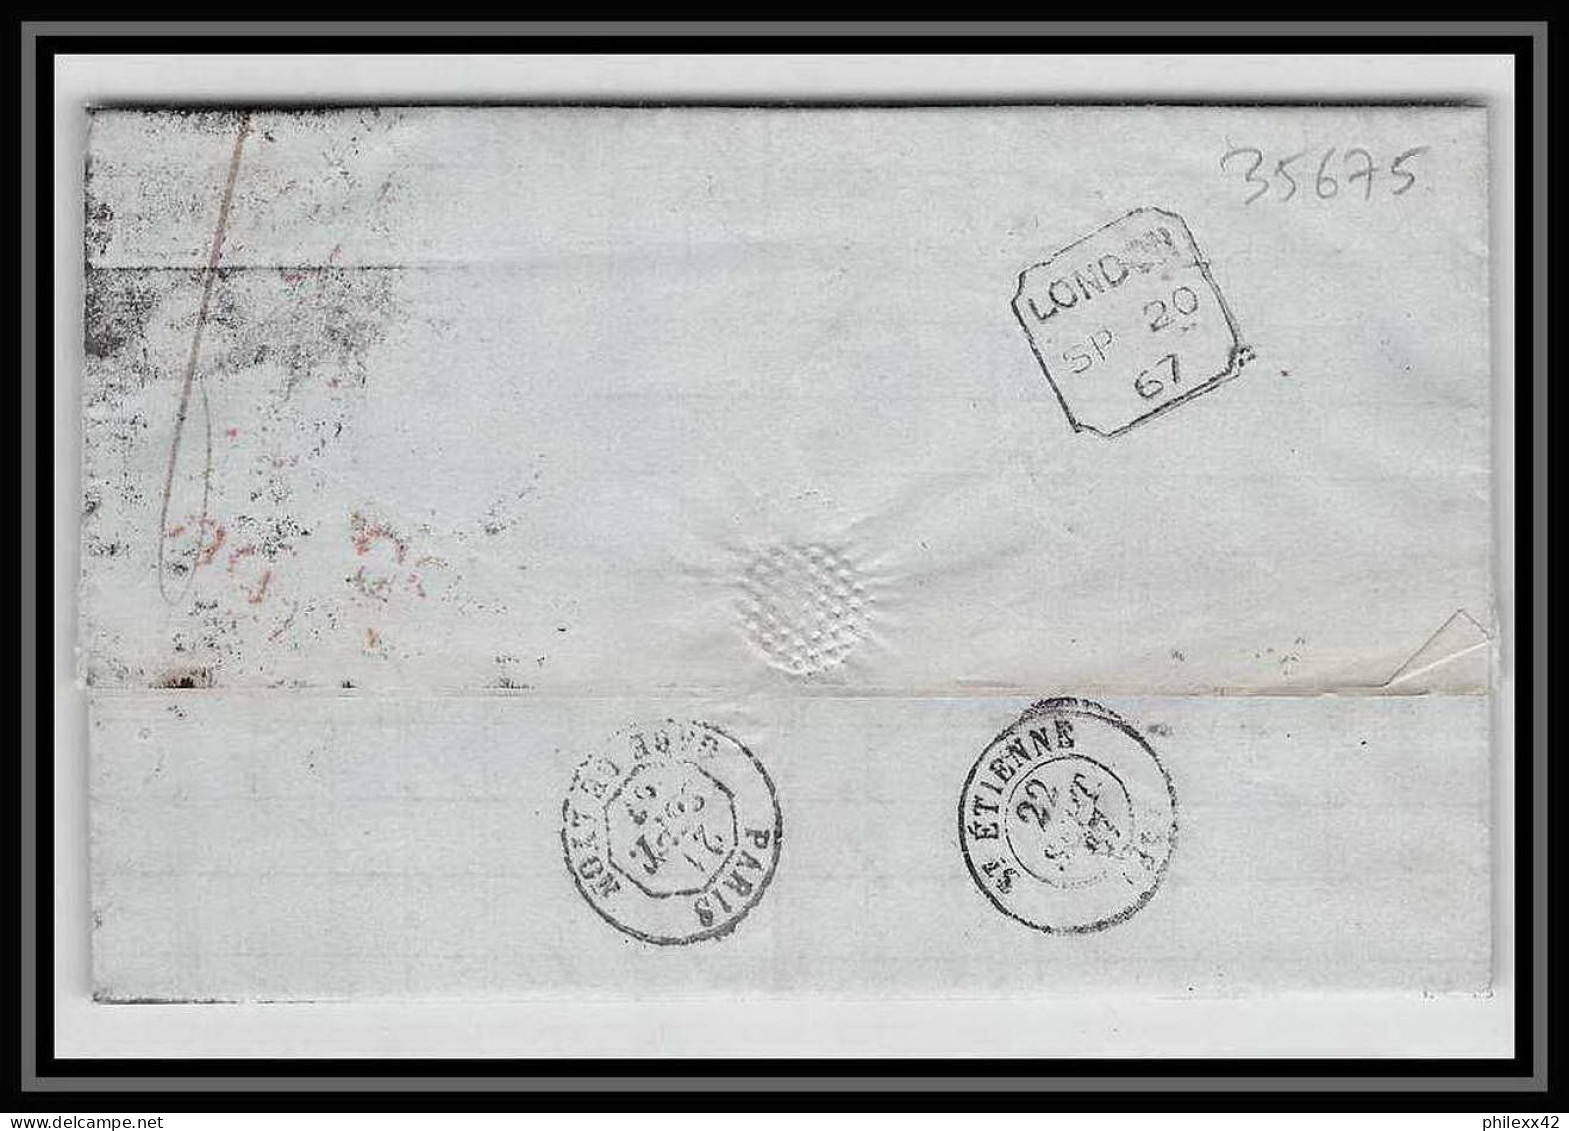 35675 N°32 Victoria 4p Red London St Etienne France 1867 Cachet 48 Lettre Cover Grande Bretagne England - Lettres & Documents